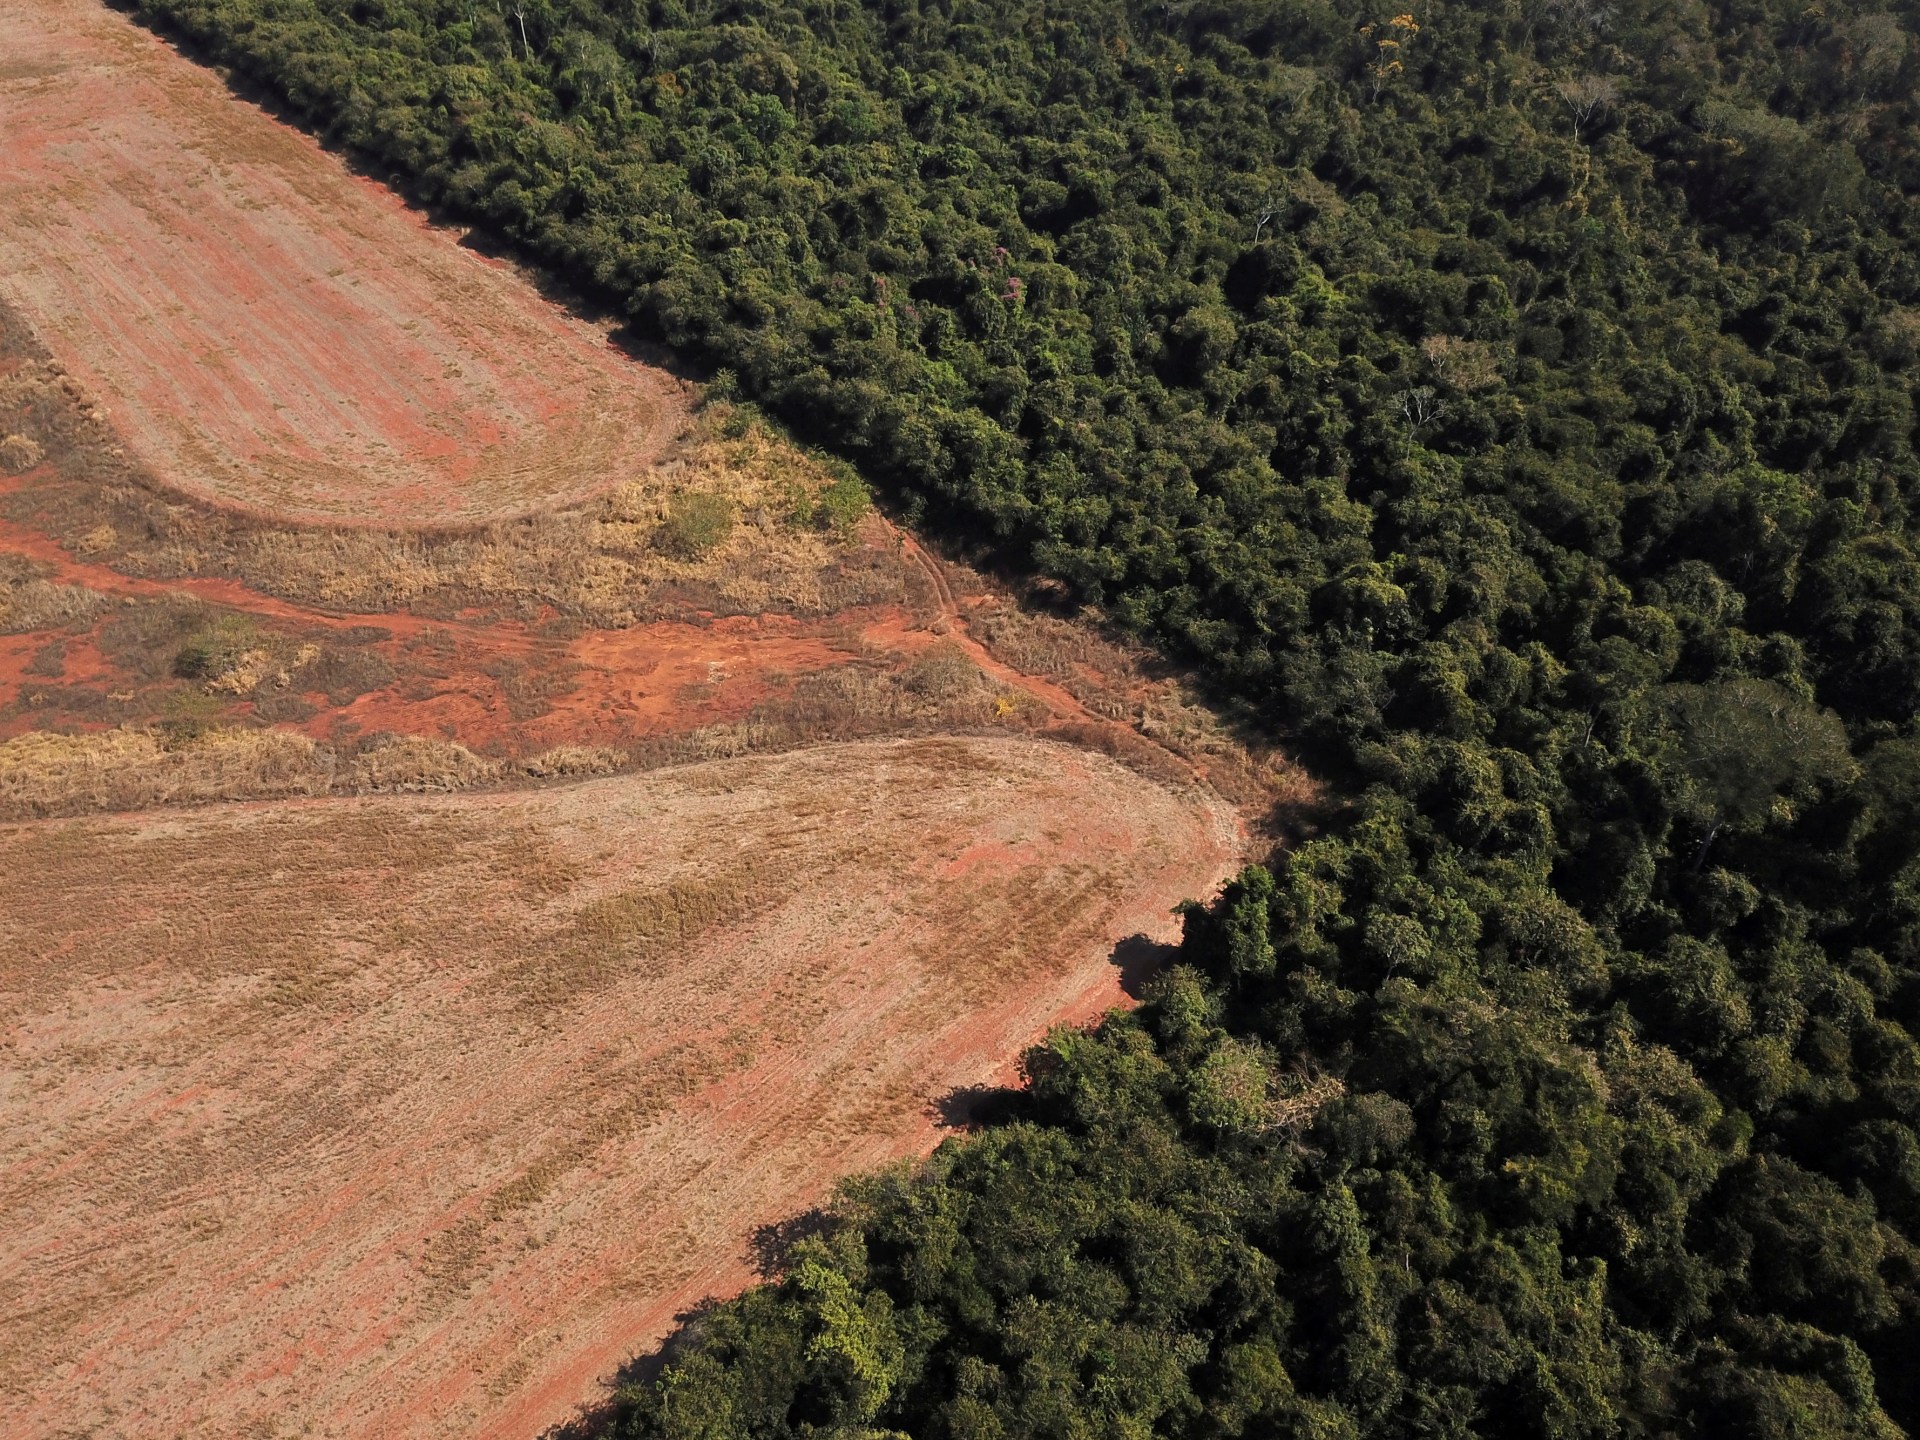 Germany pledges millions to help Brazil protect  rainforest, Environment News